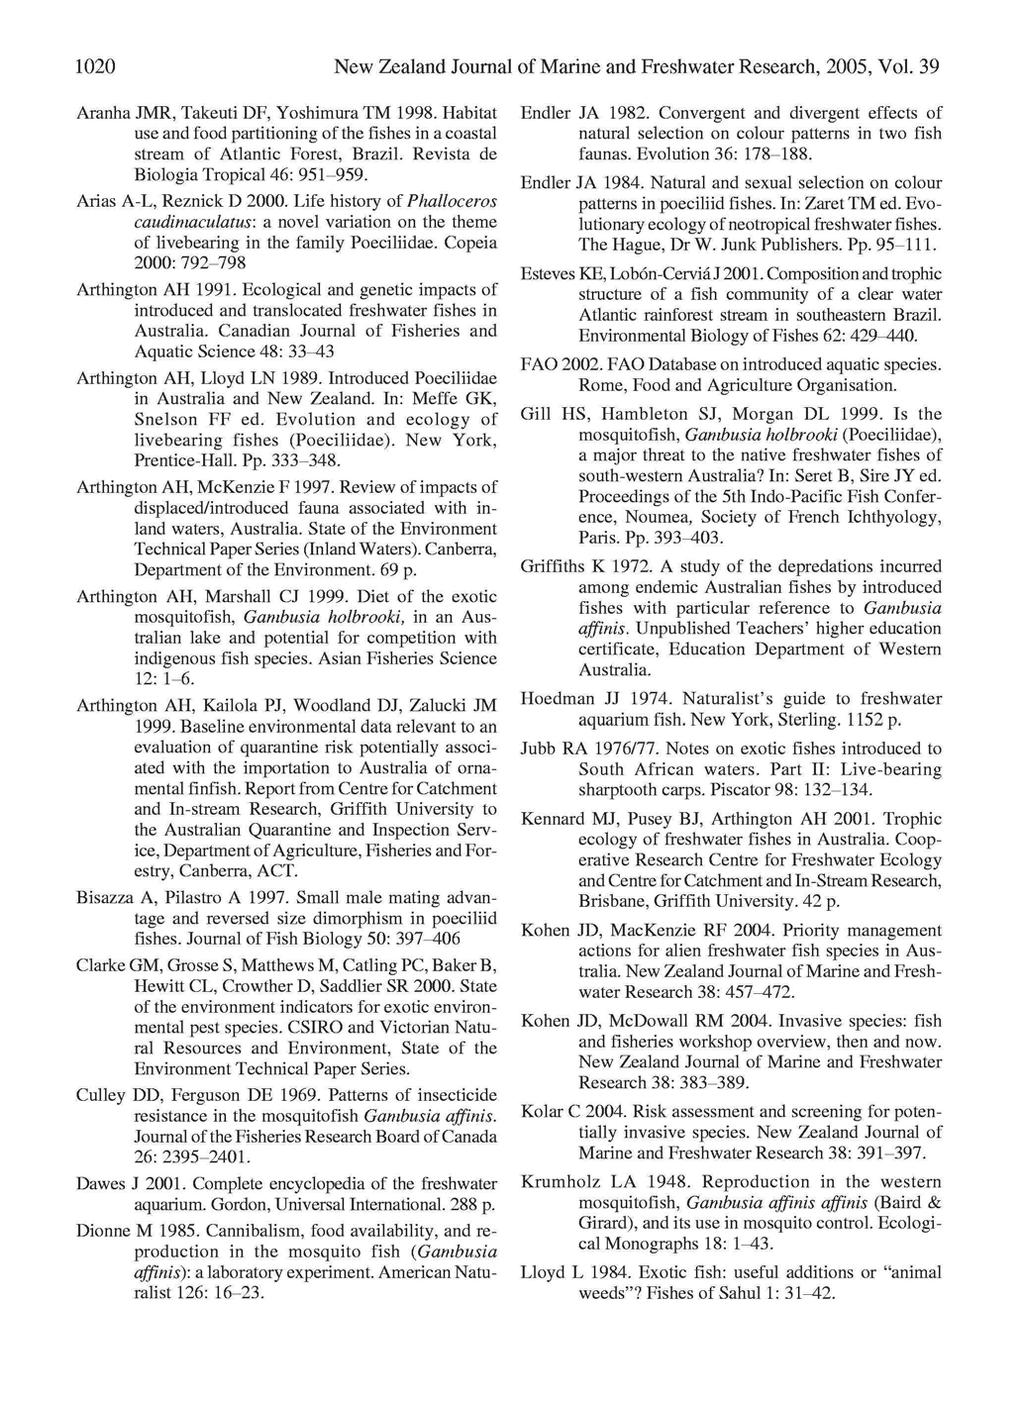 12 New Zealand Journal of Marine and Freshwater Research, 2, Vol. 39 Aranha JMR, Takeuti DF, Yoshimura TM 1998.